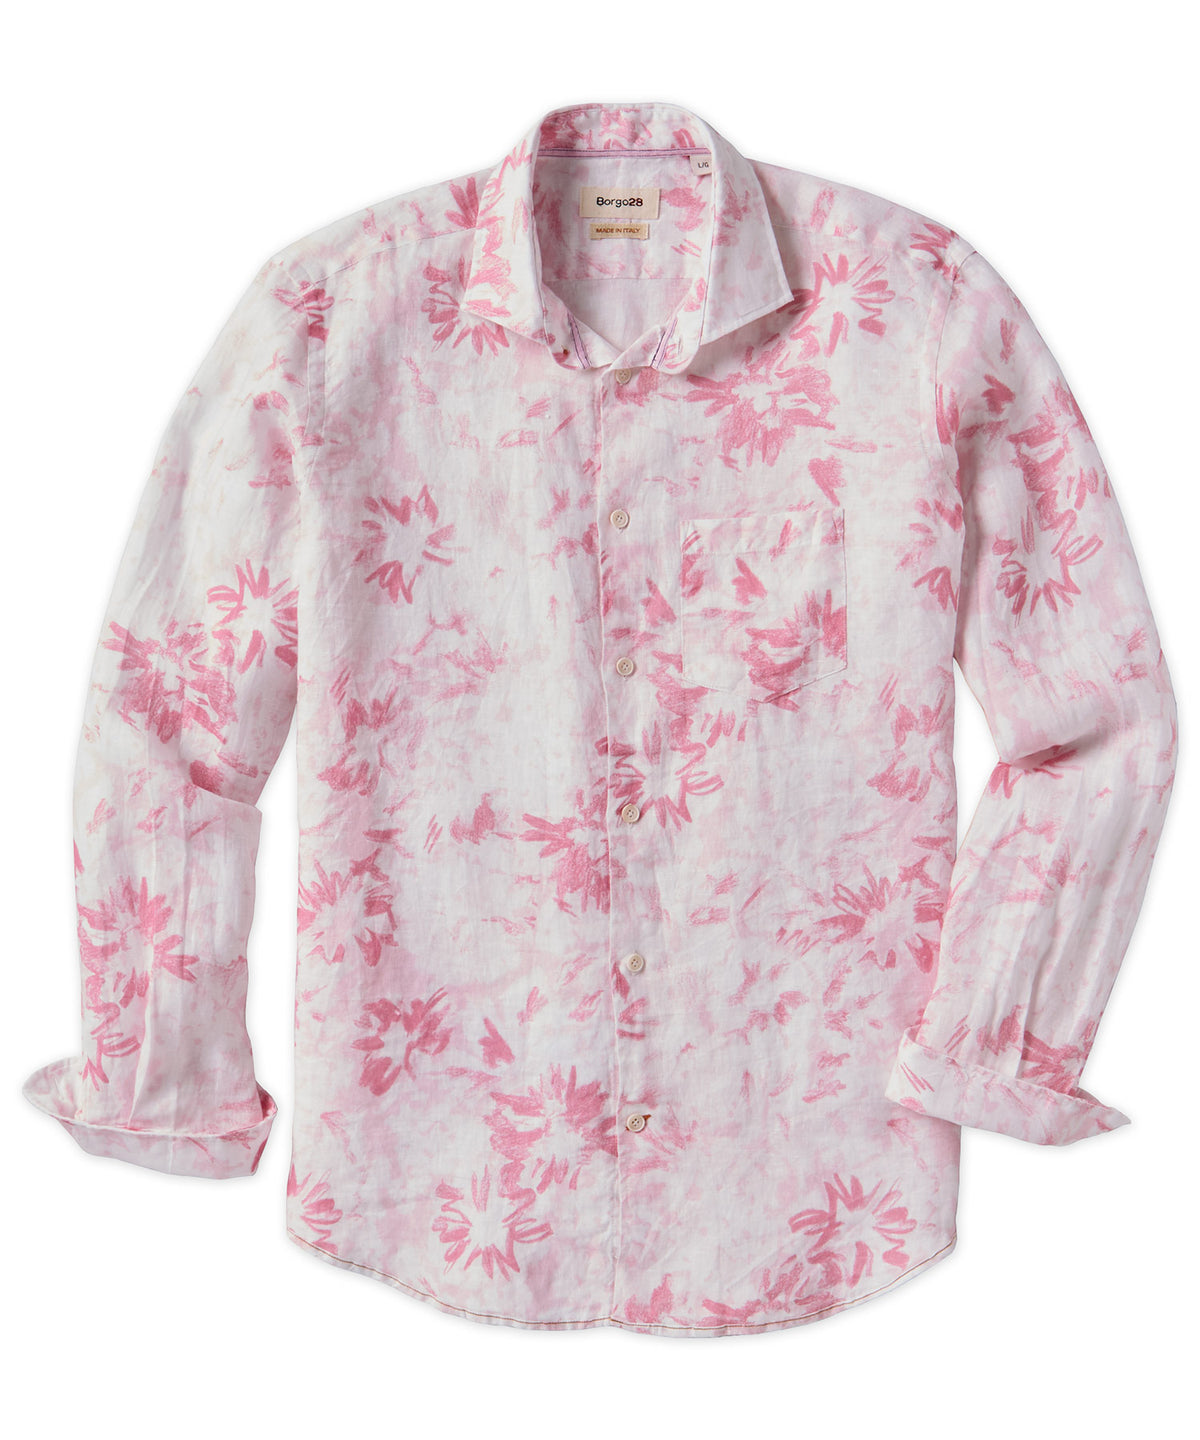 Merlino Flower Long Sleeve Linen Sport Shirt